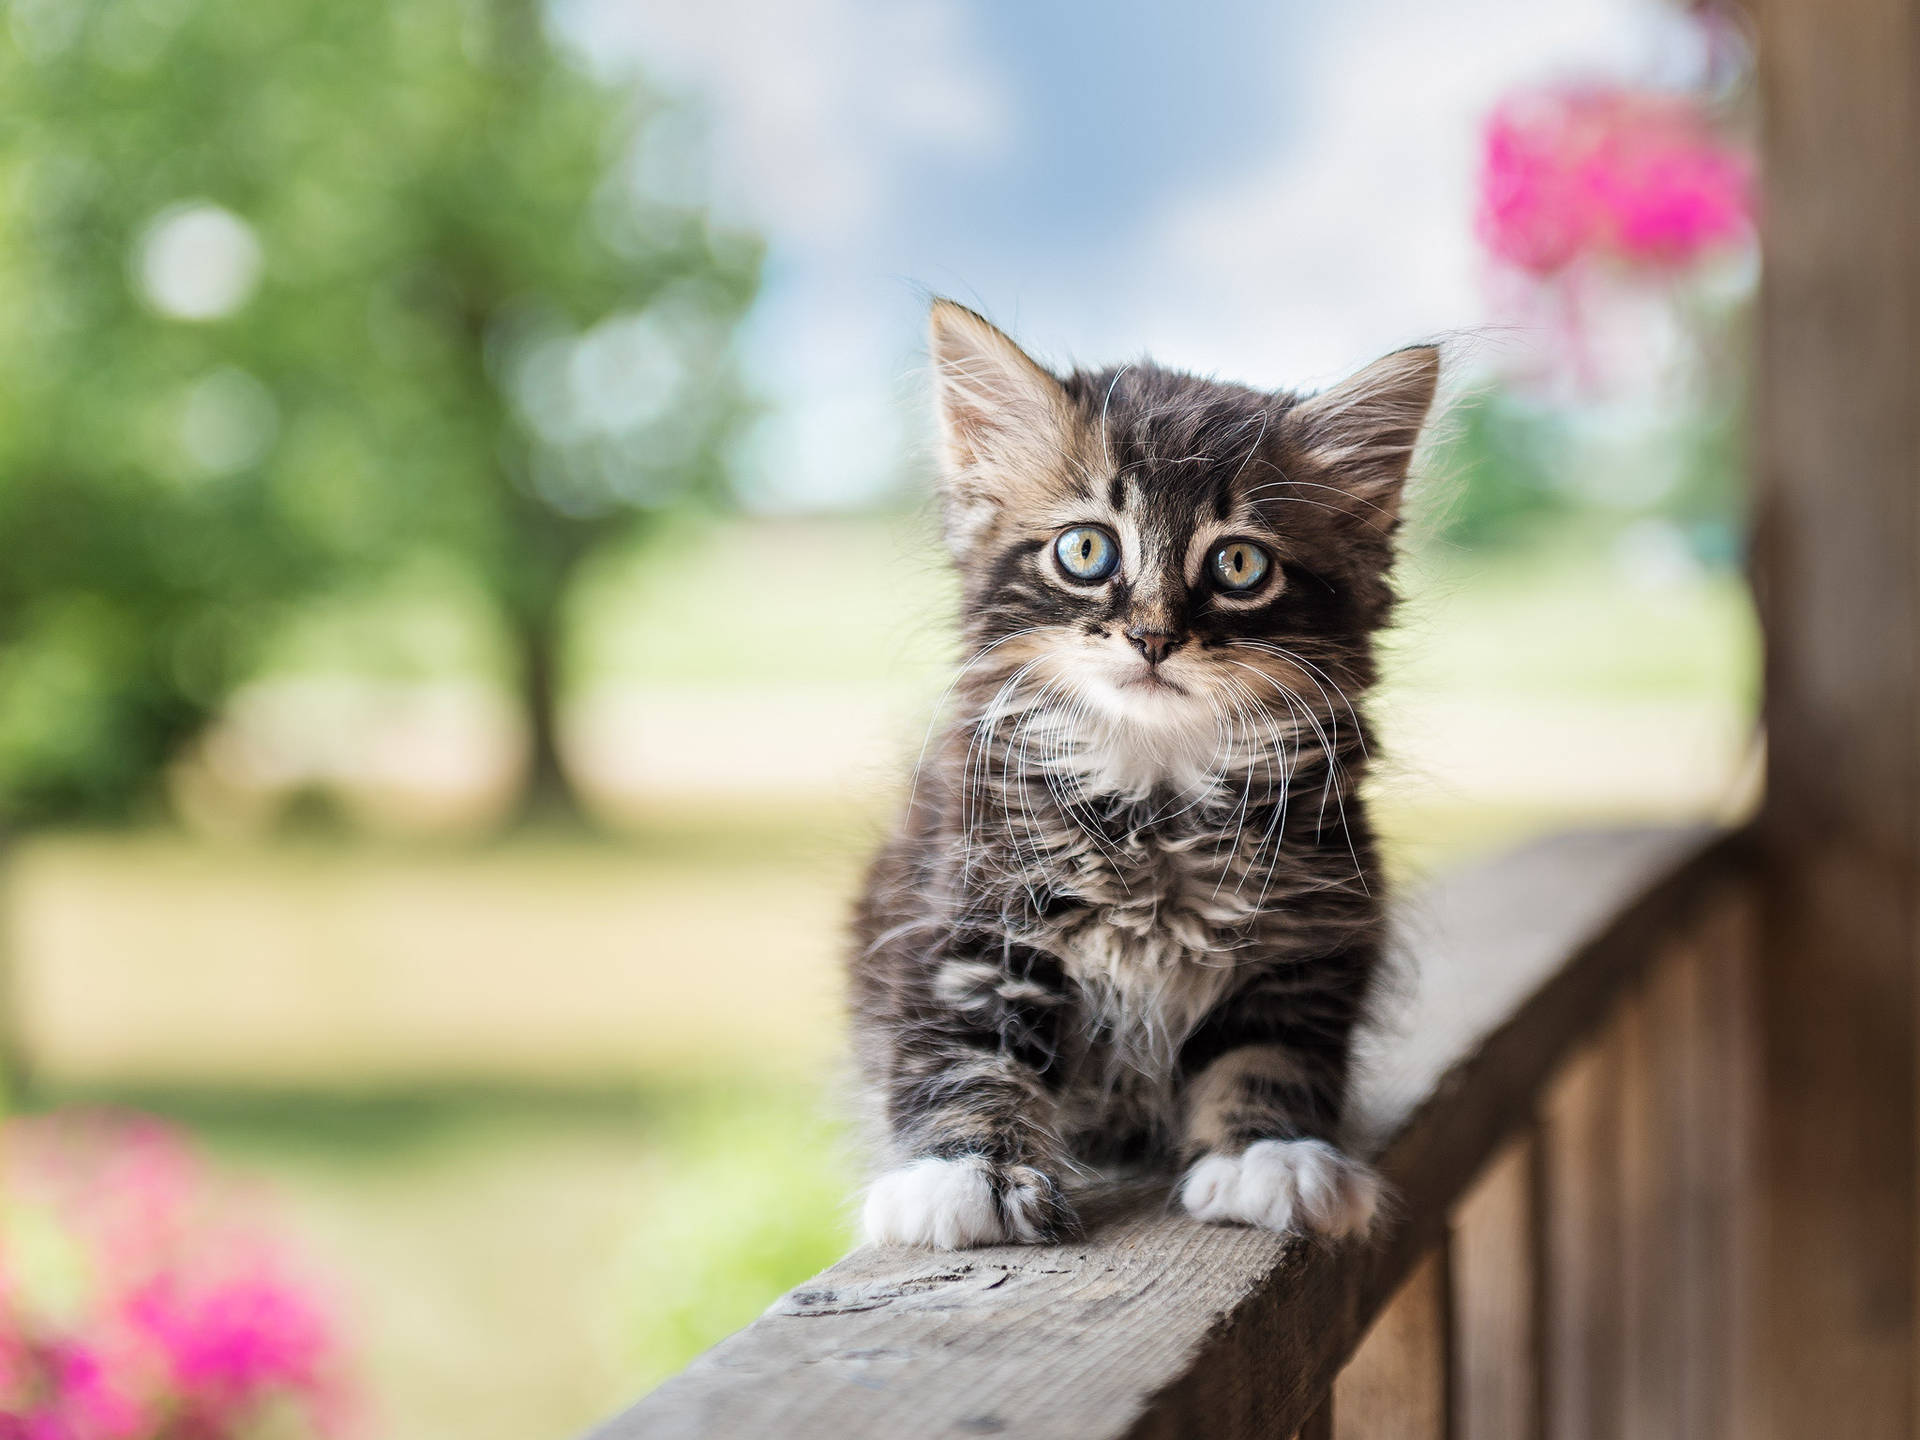 Cute Kitten On Wooden Railing Background